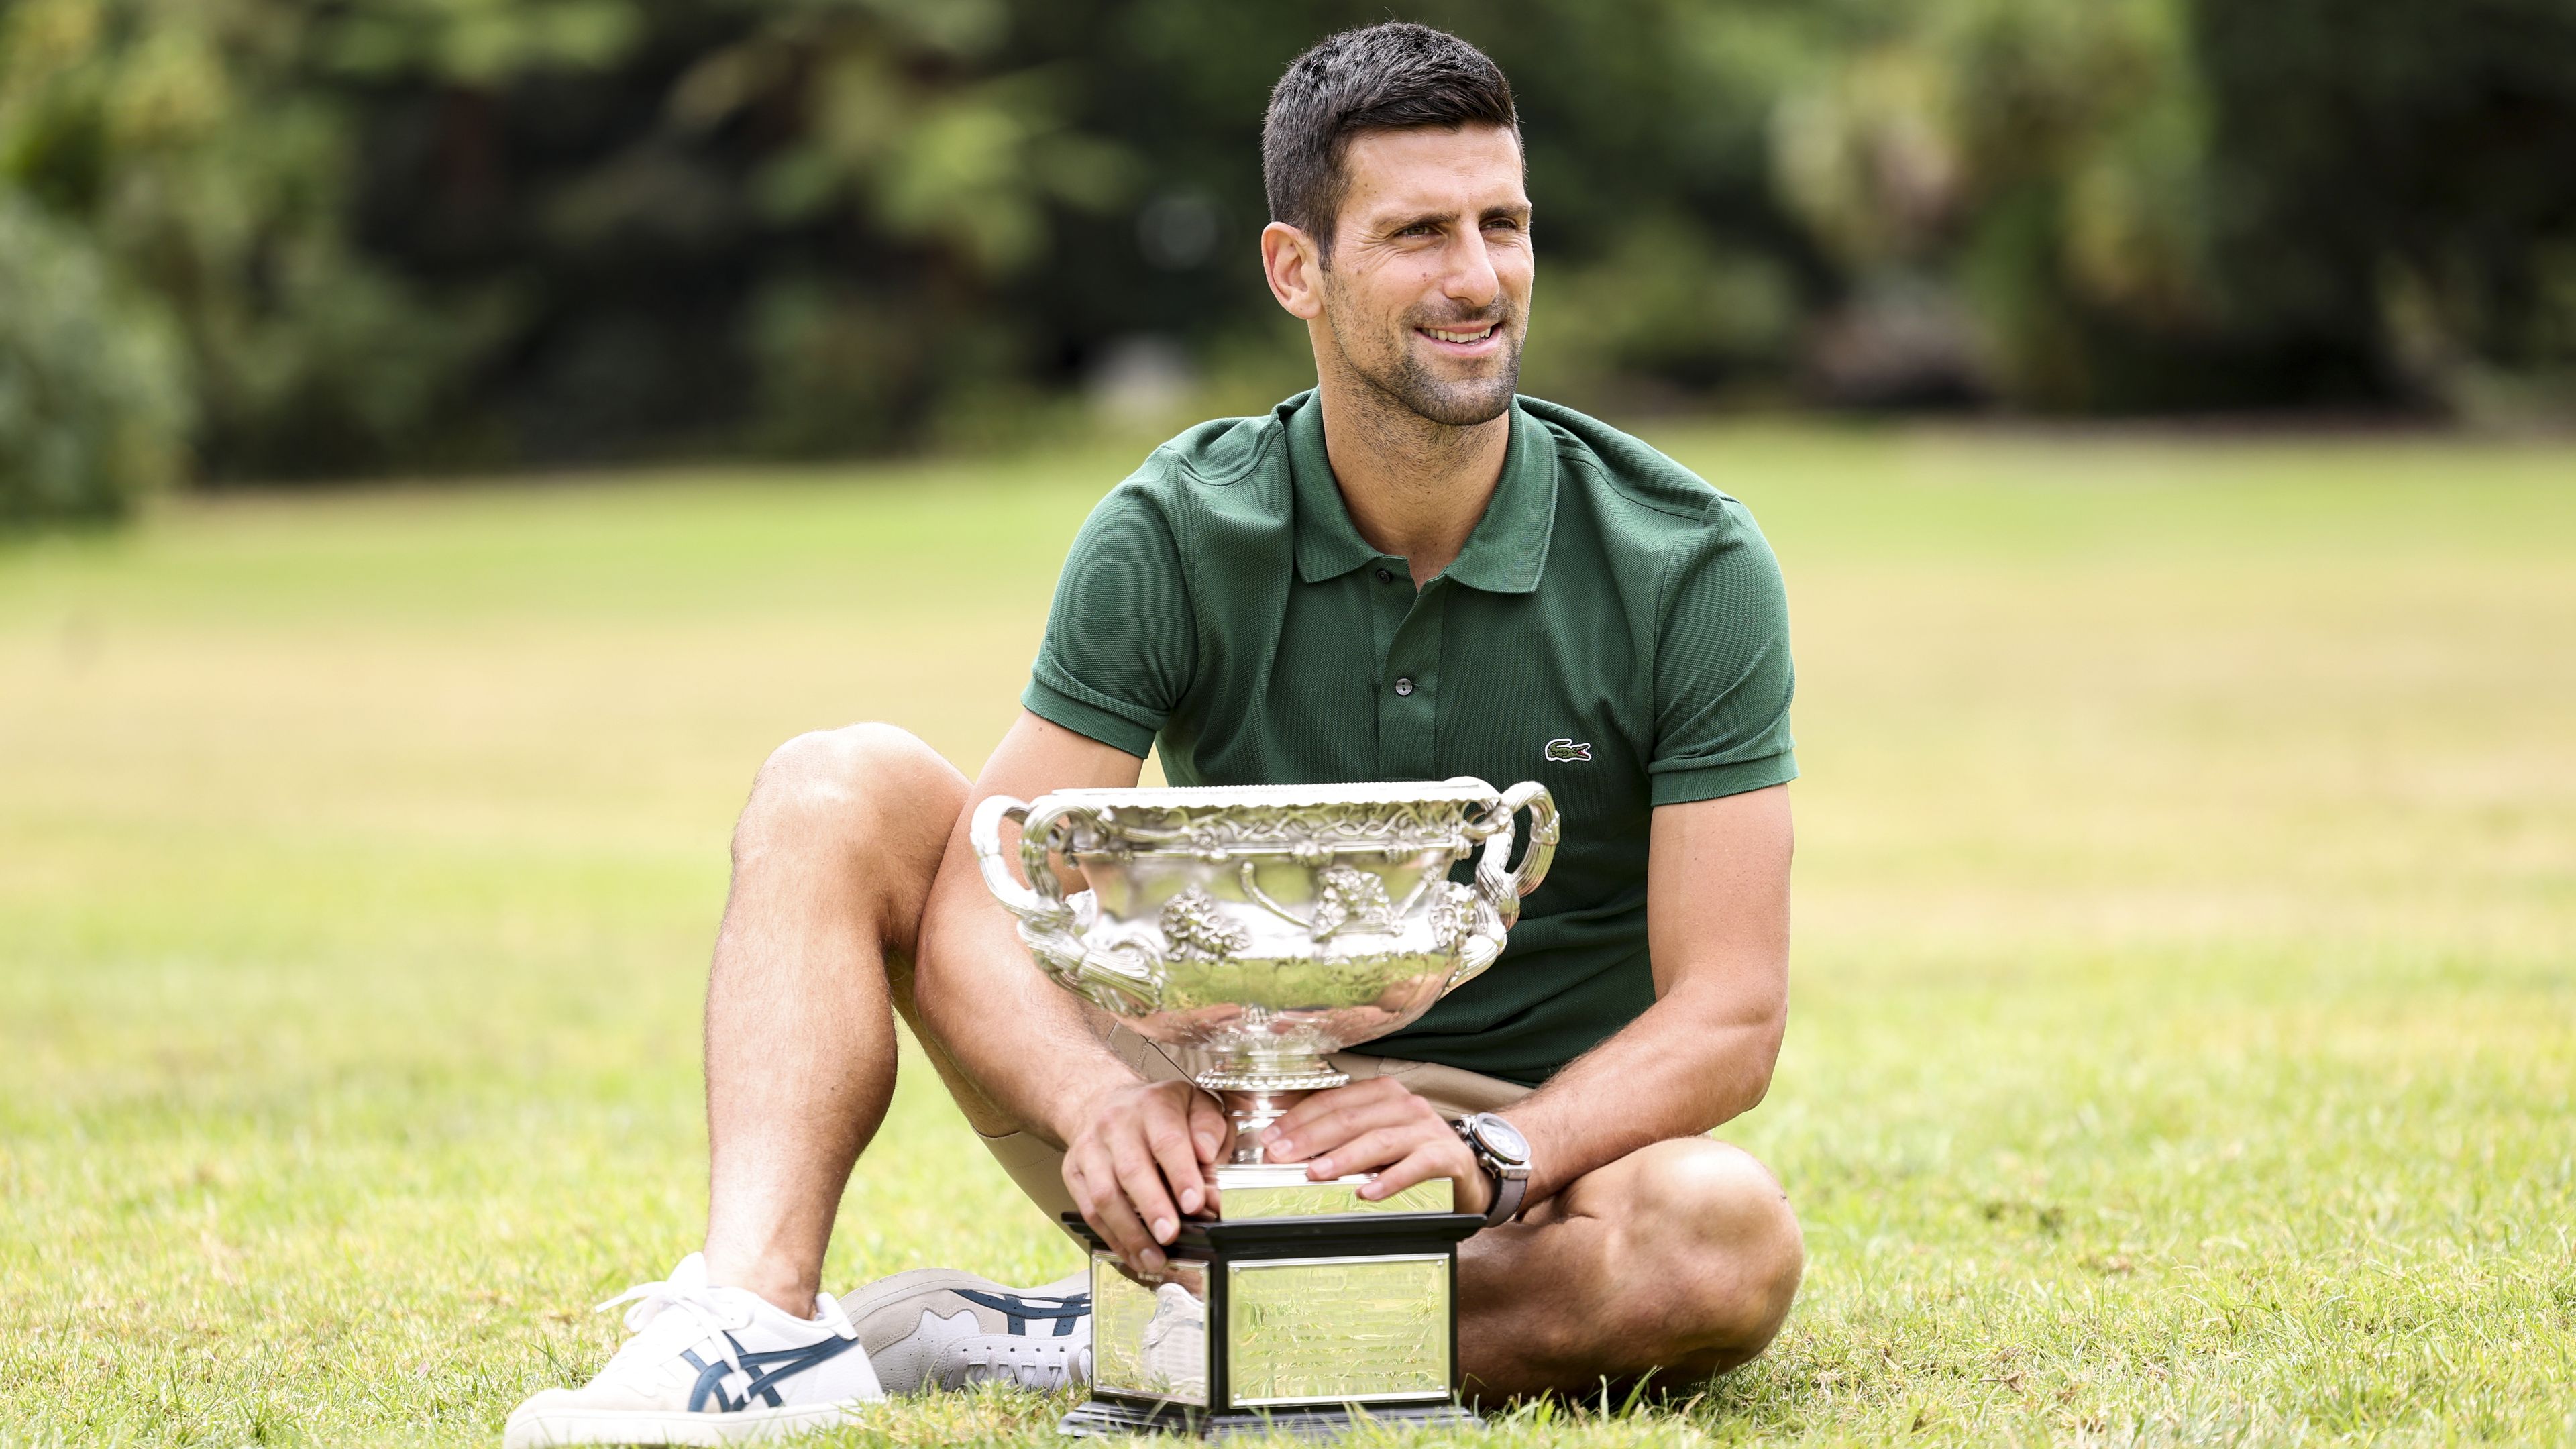 'Media and doping control': How 'deflated' Novak Djokovic celebrated victory